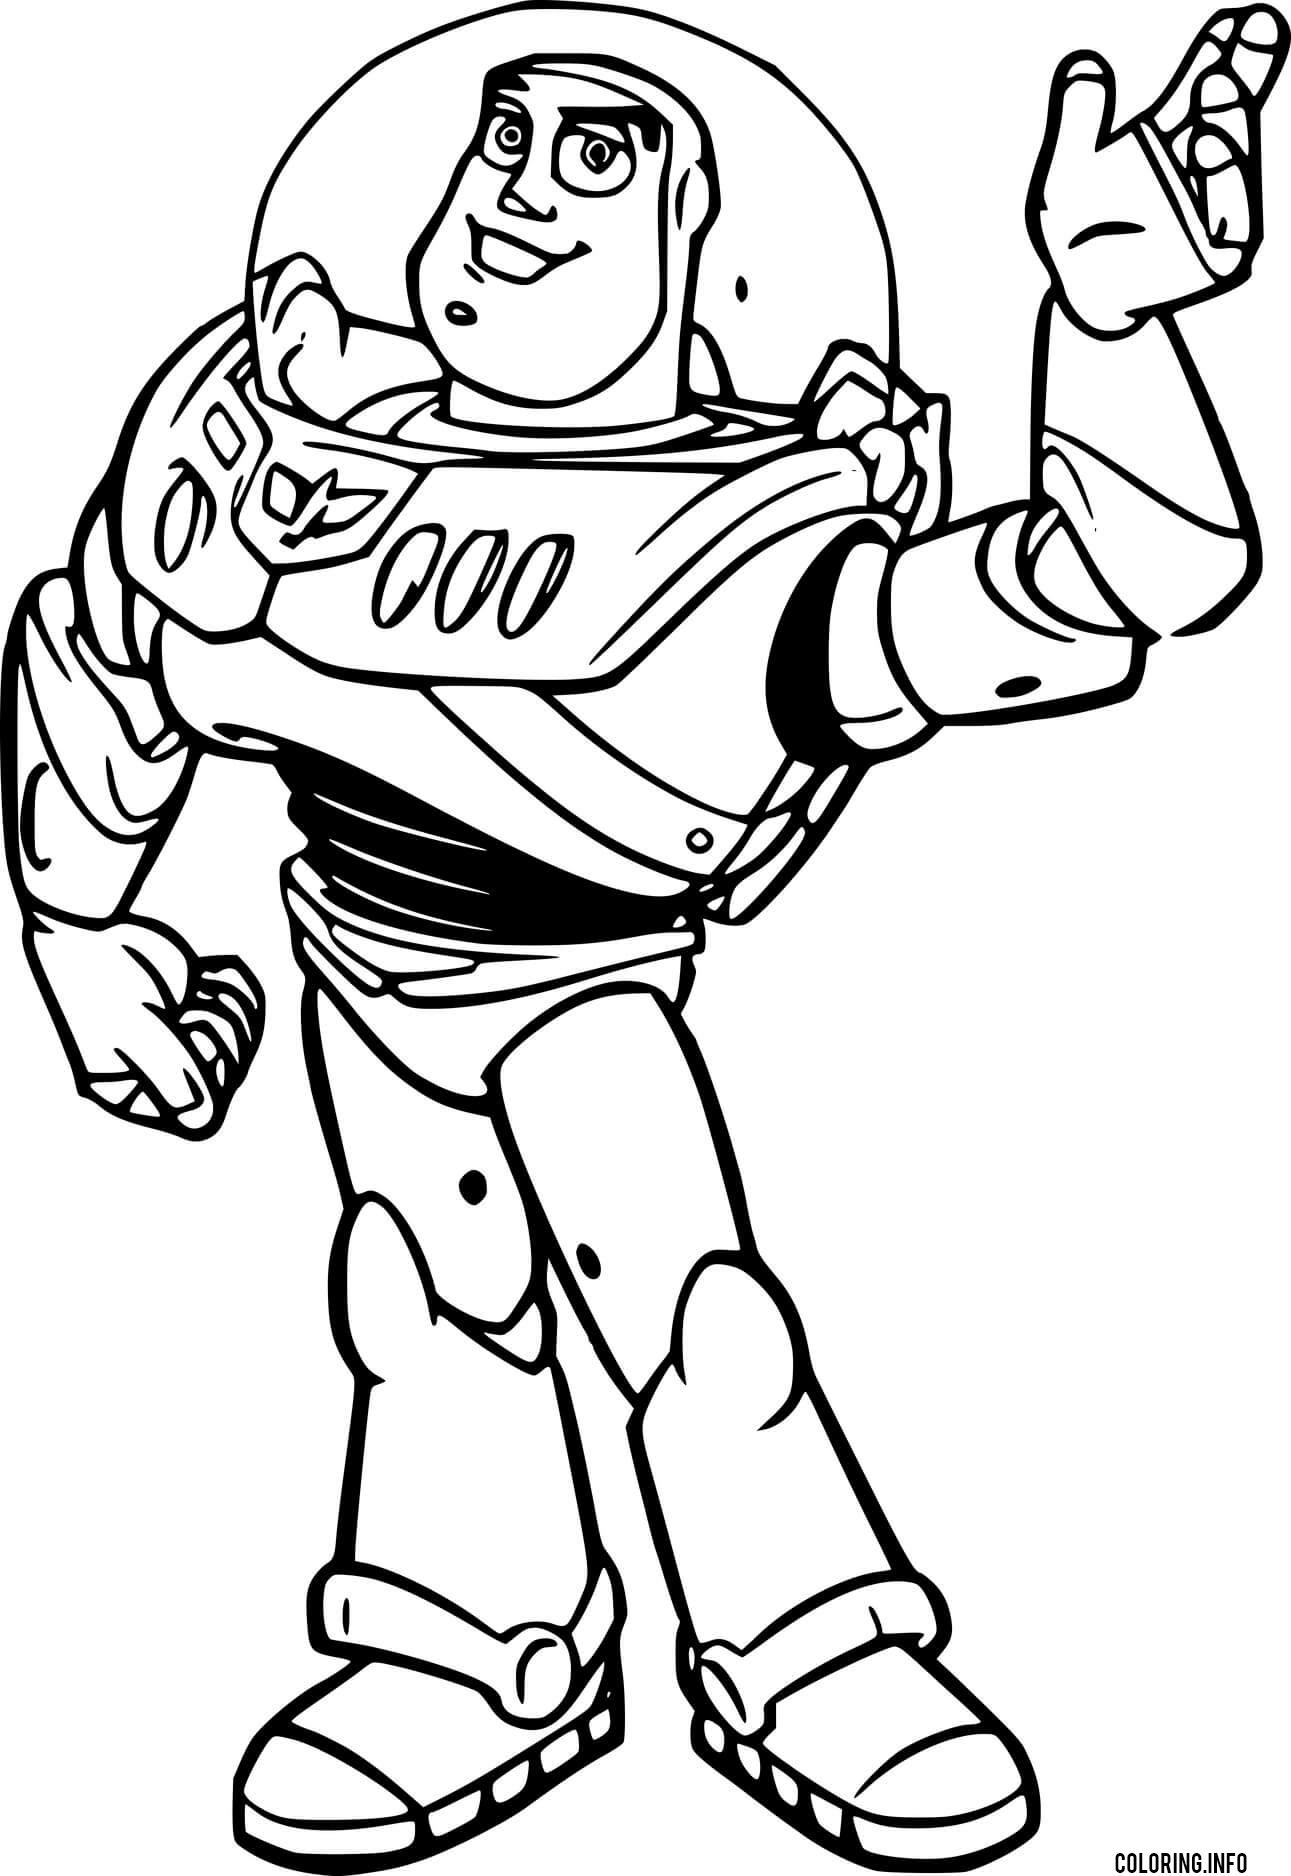 Buzz Lightyear Talking coloring